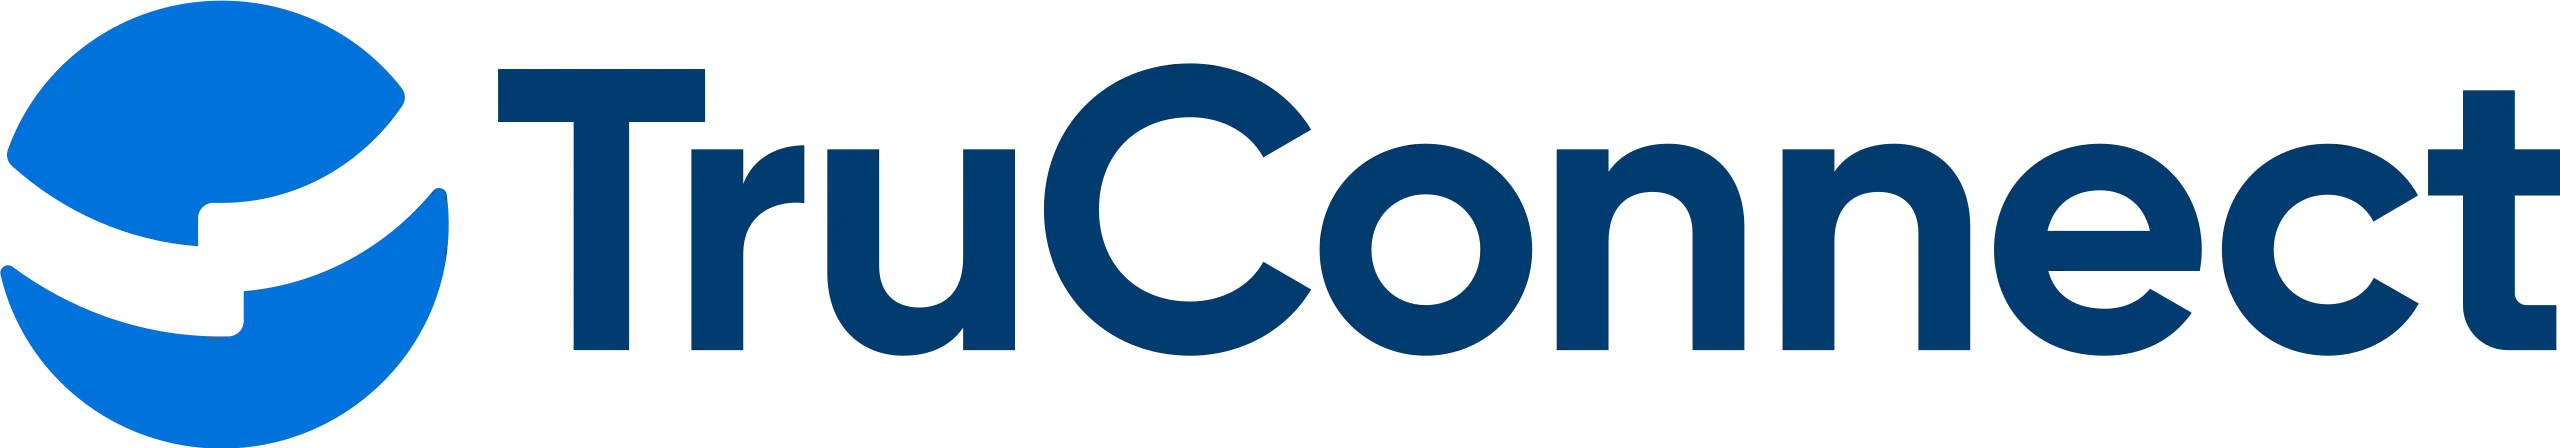 TruConnect-Horizontal-Logo